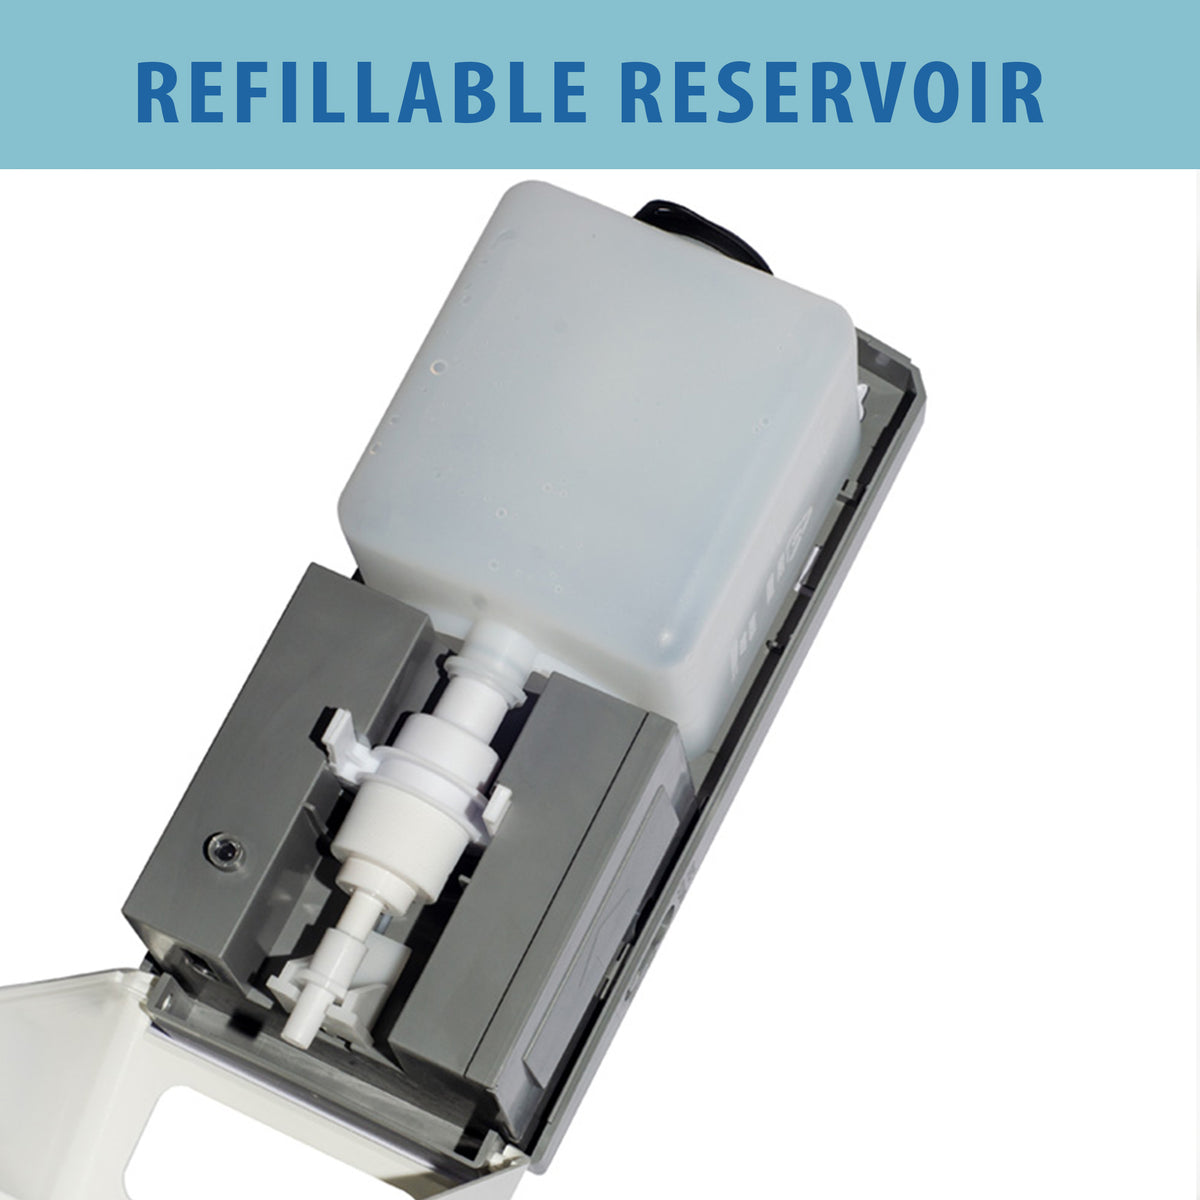 refillable reservoir